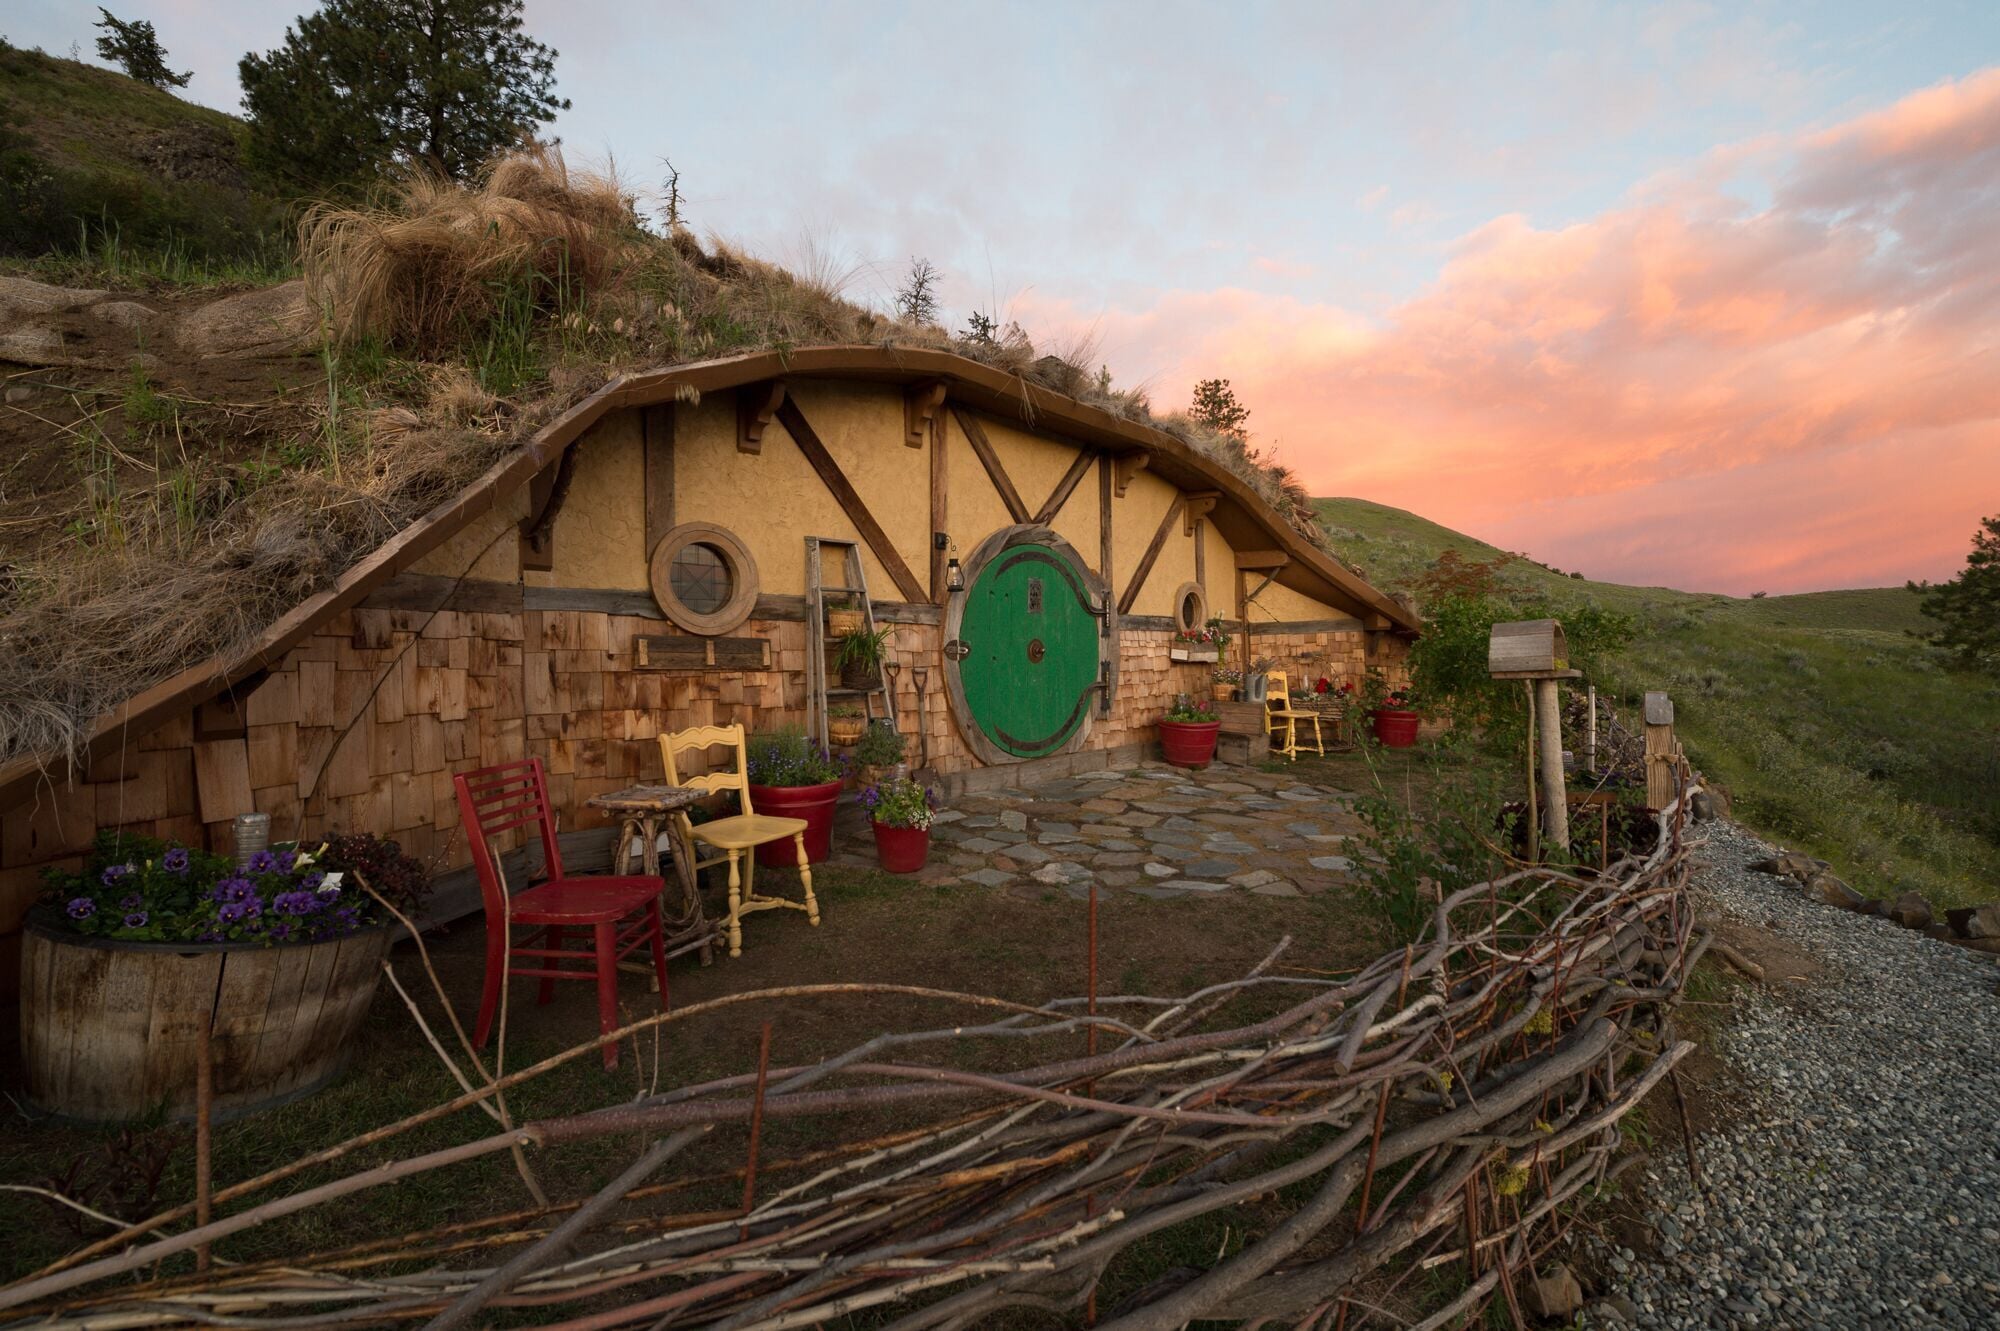 The Chelan Hobbit Haven airbnb, located in Orondo, Washington.